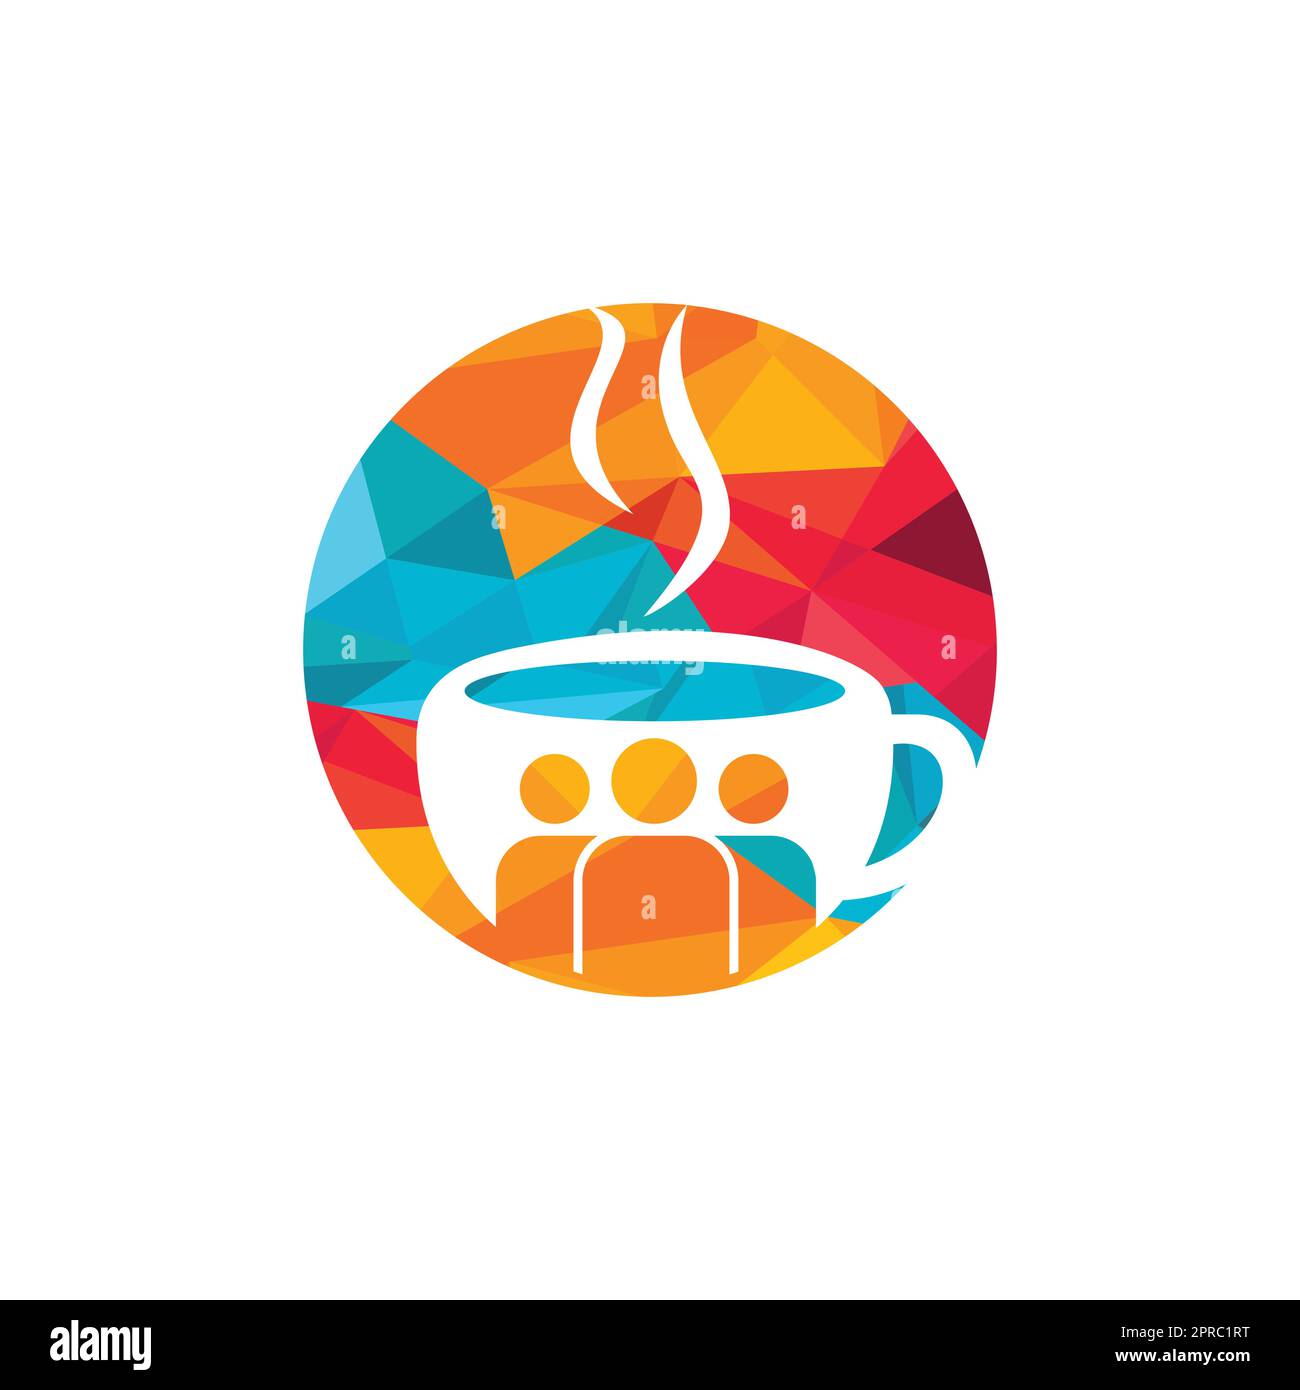 Community coffee logo Stock Vector Images - Alamy